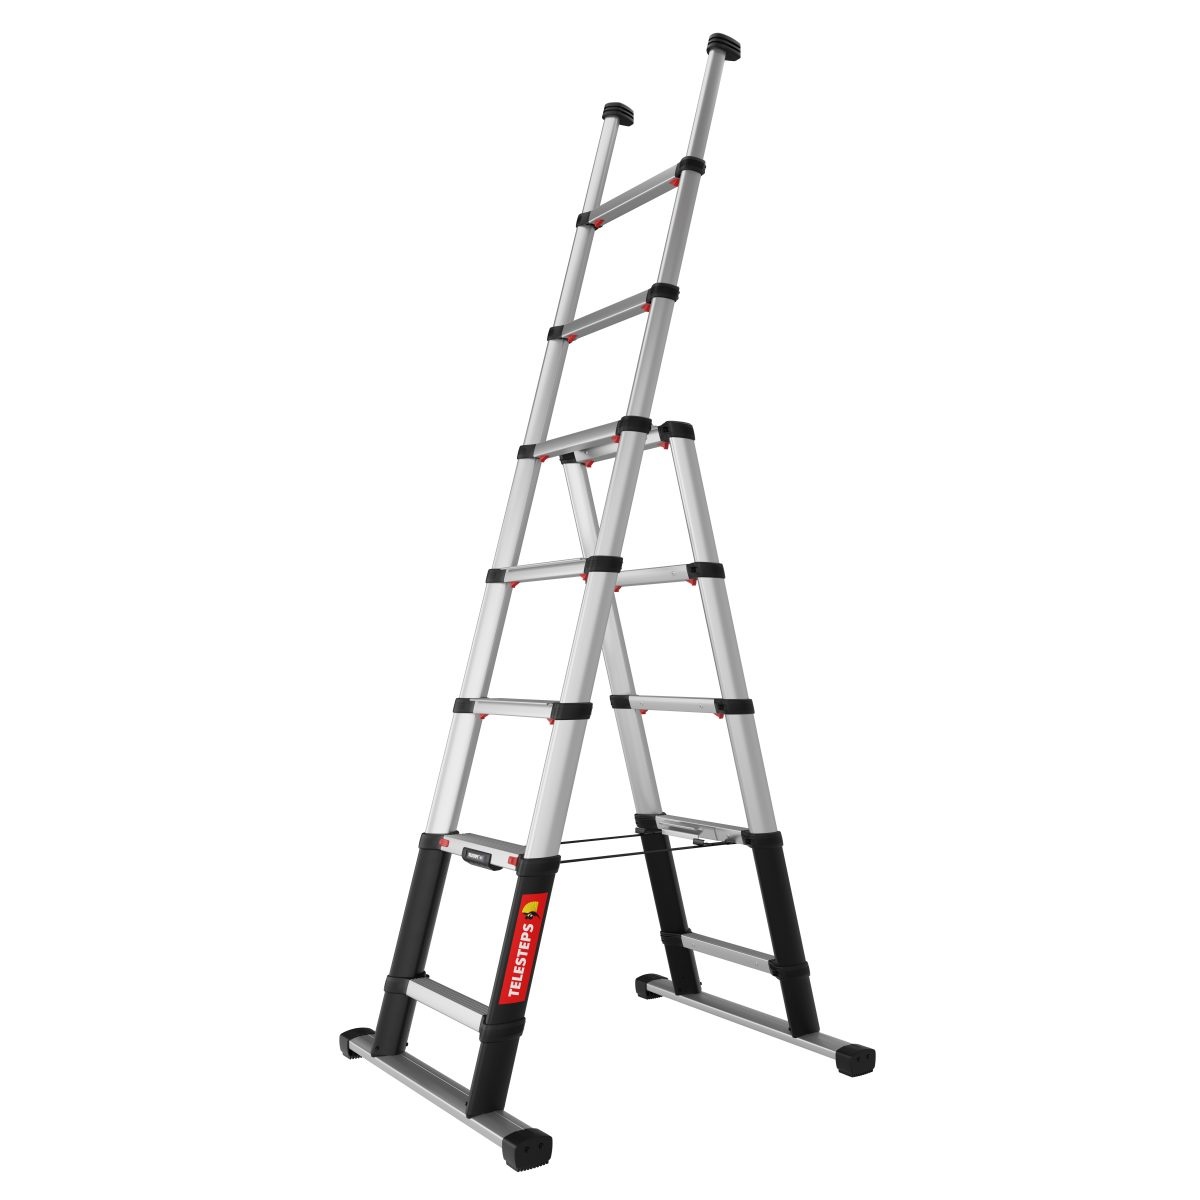 Telesteps multifunctionele ladder - 2,3 meter - aluminium - Hevutools.nl